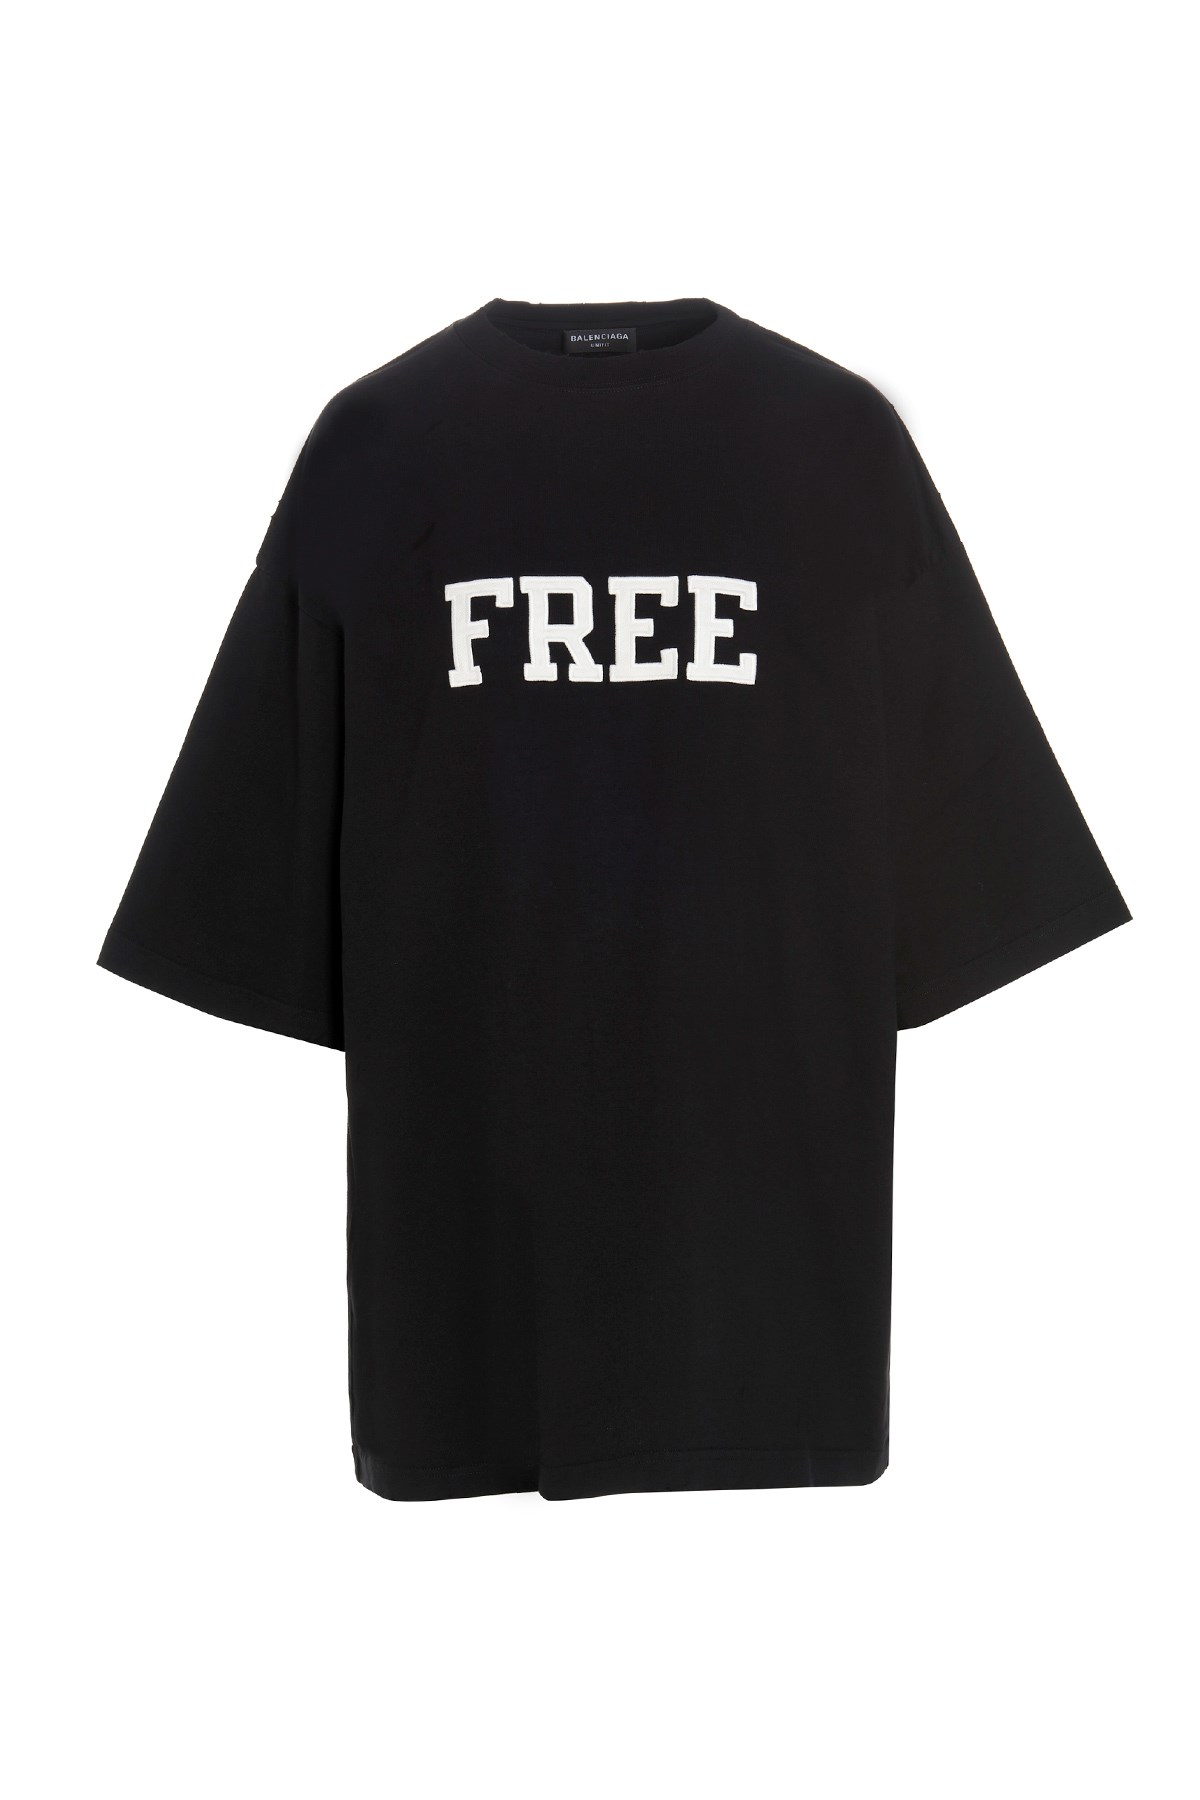 BALENCIAGA ‘Free’ T-Shirt